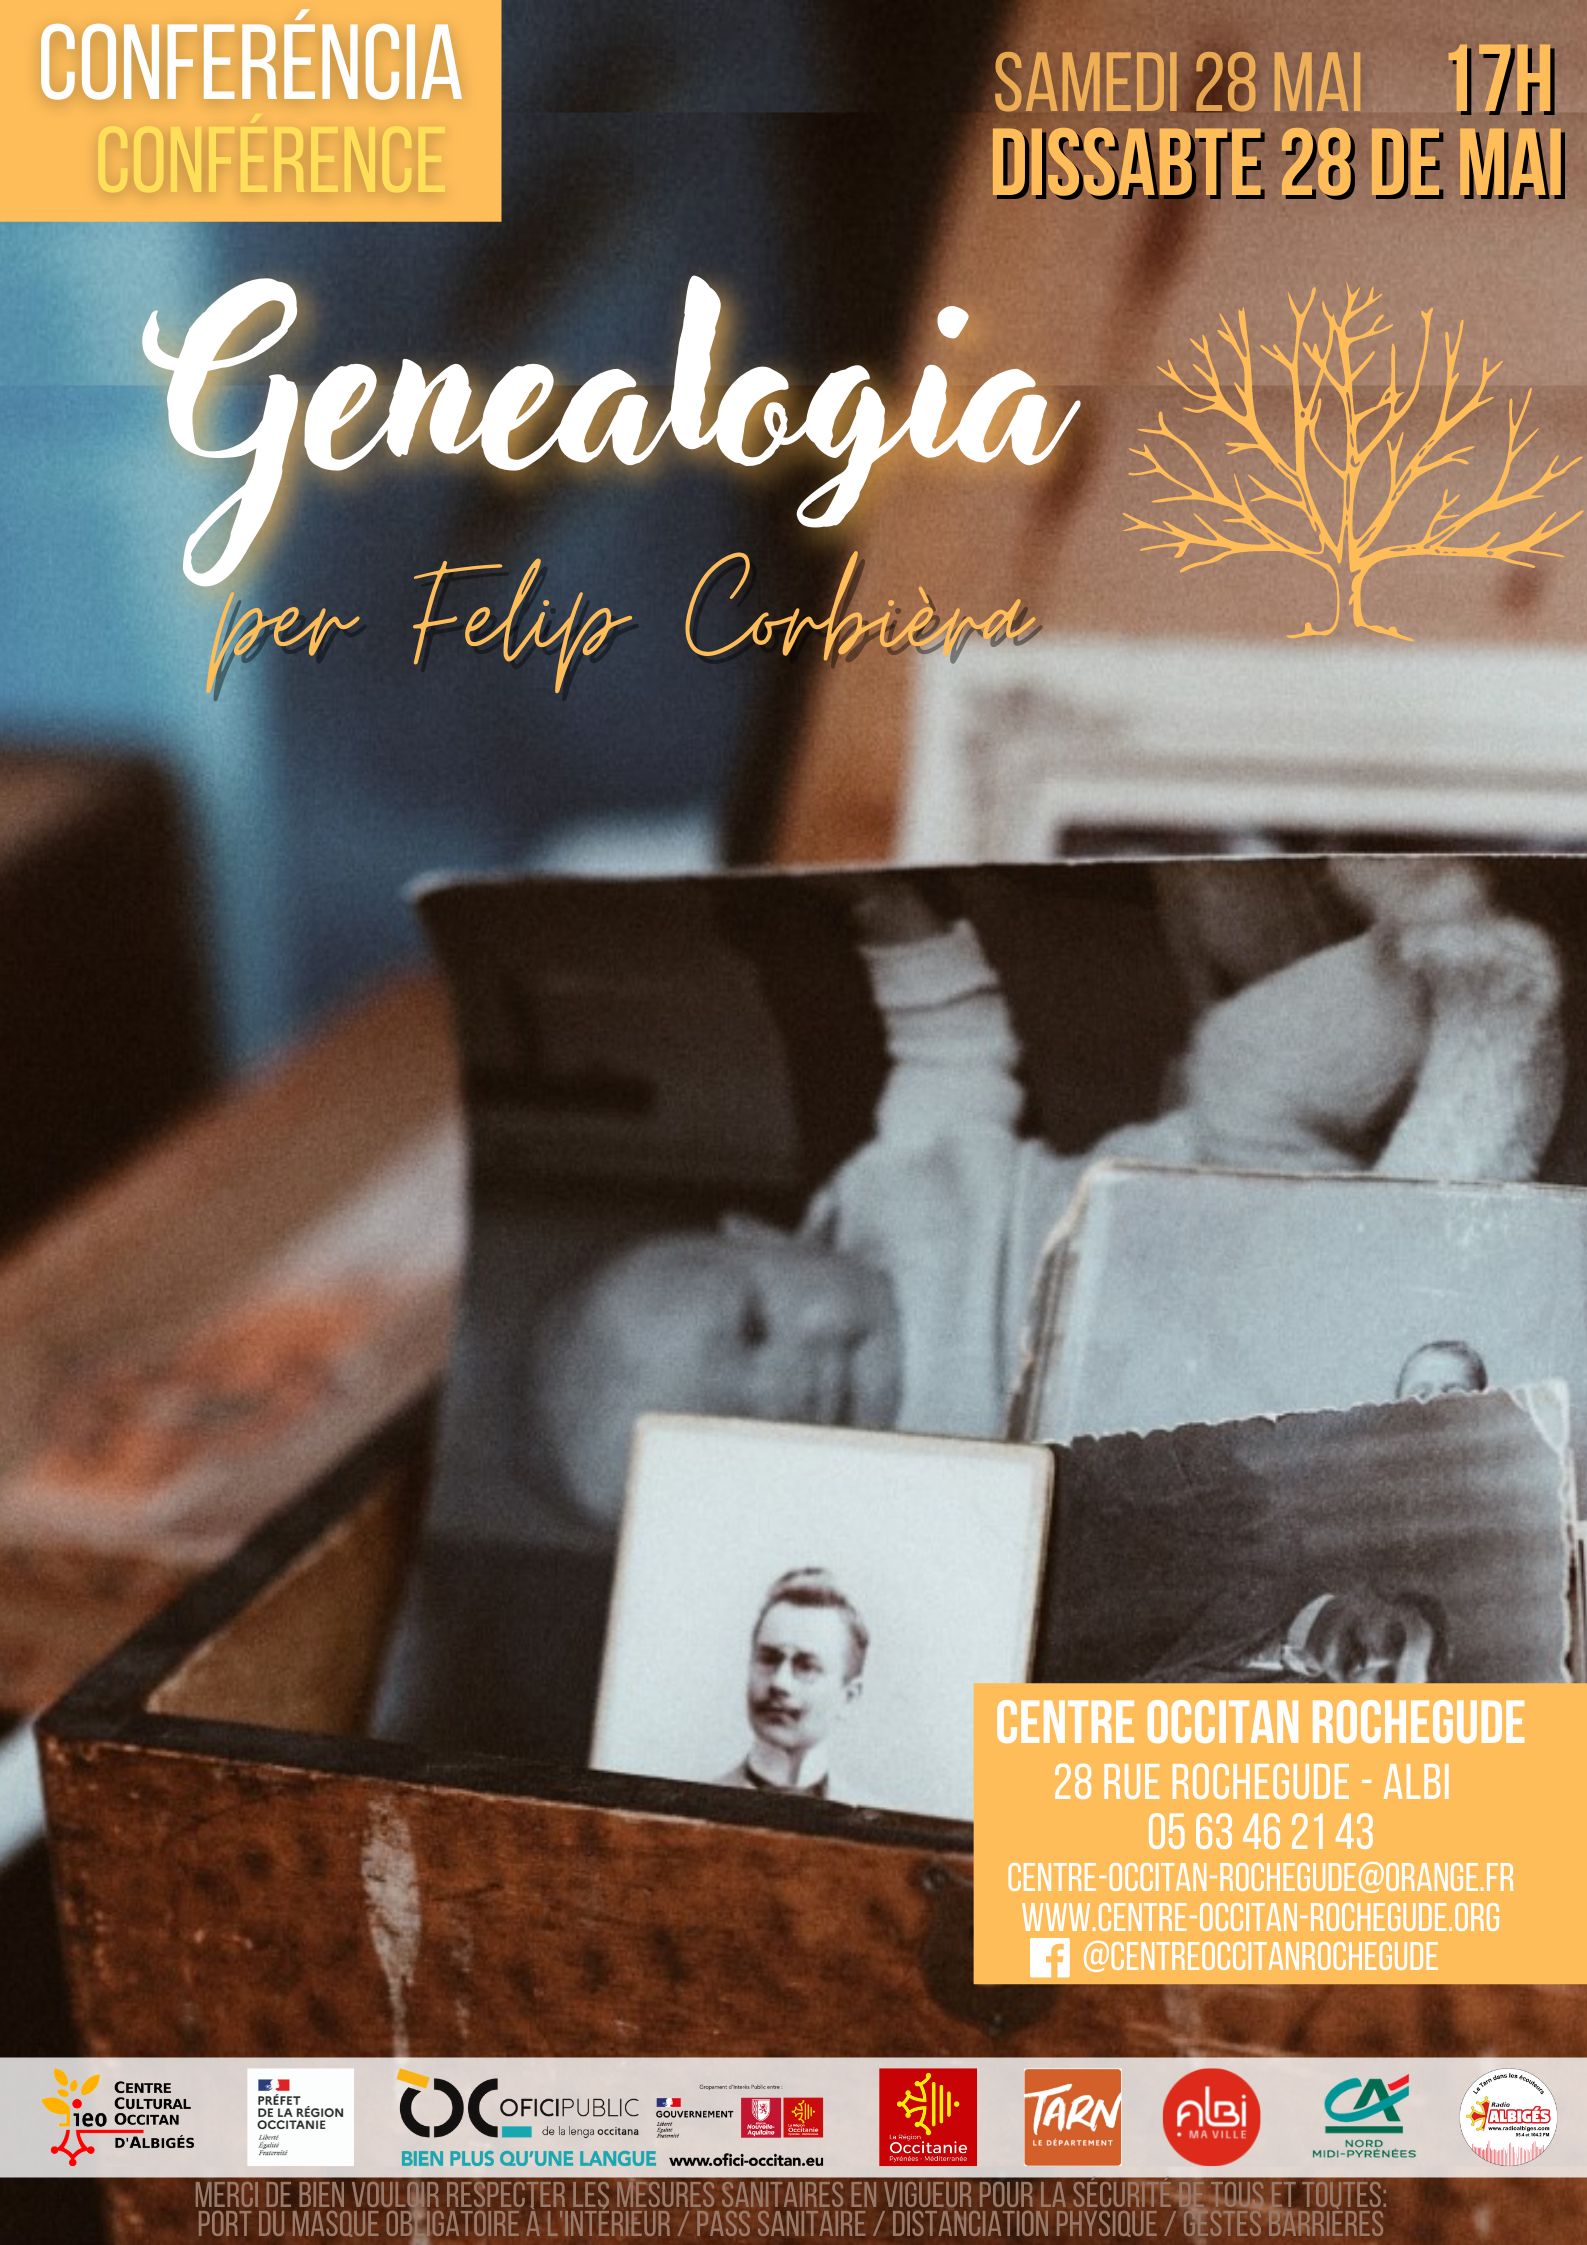 You are currently viewing La genealogia amb Felip Corbièra